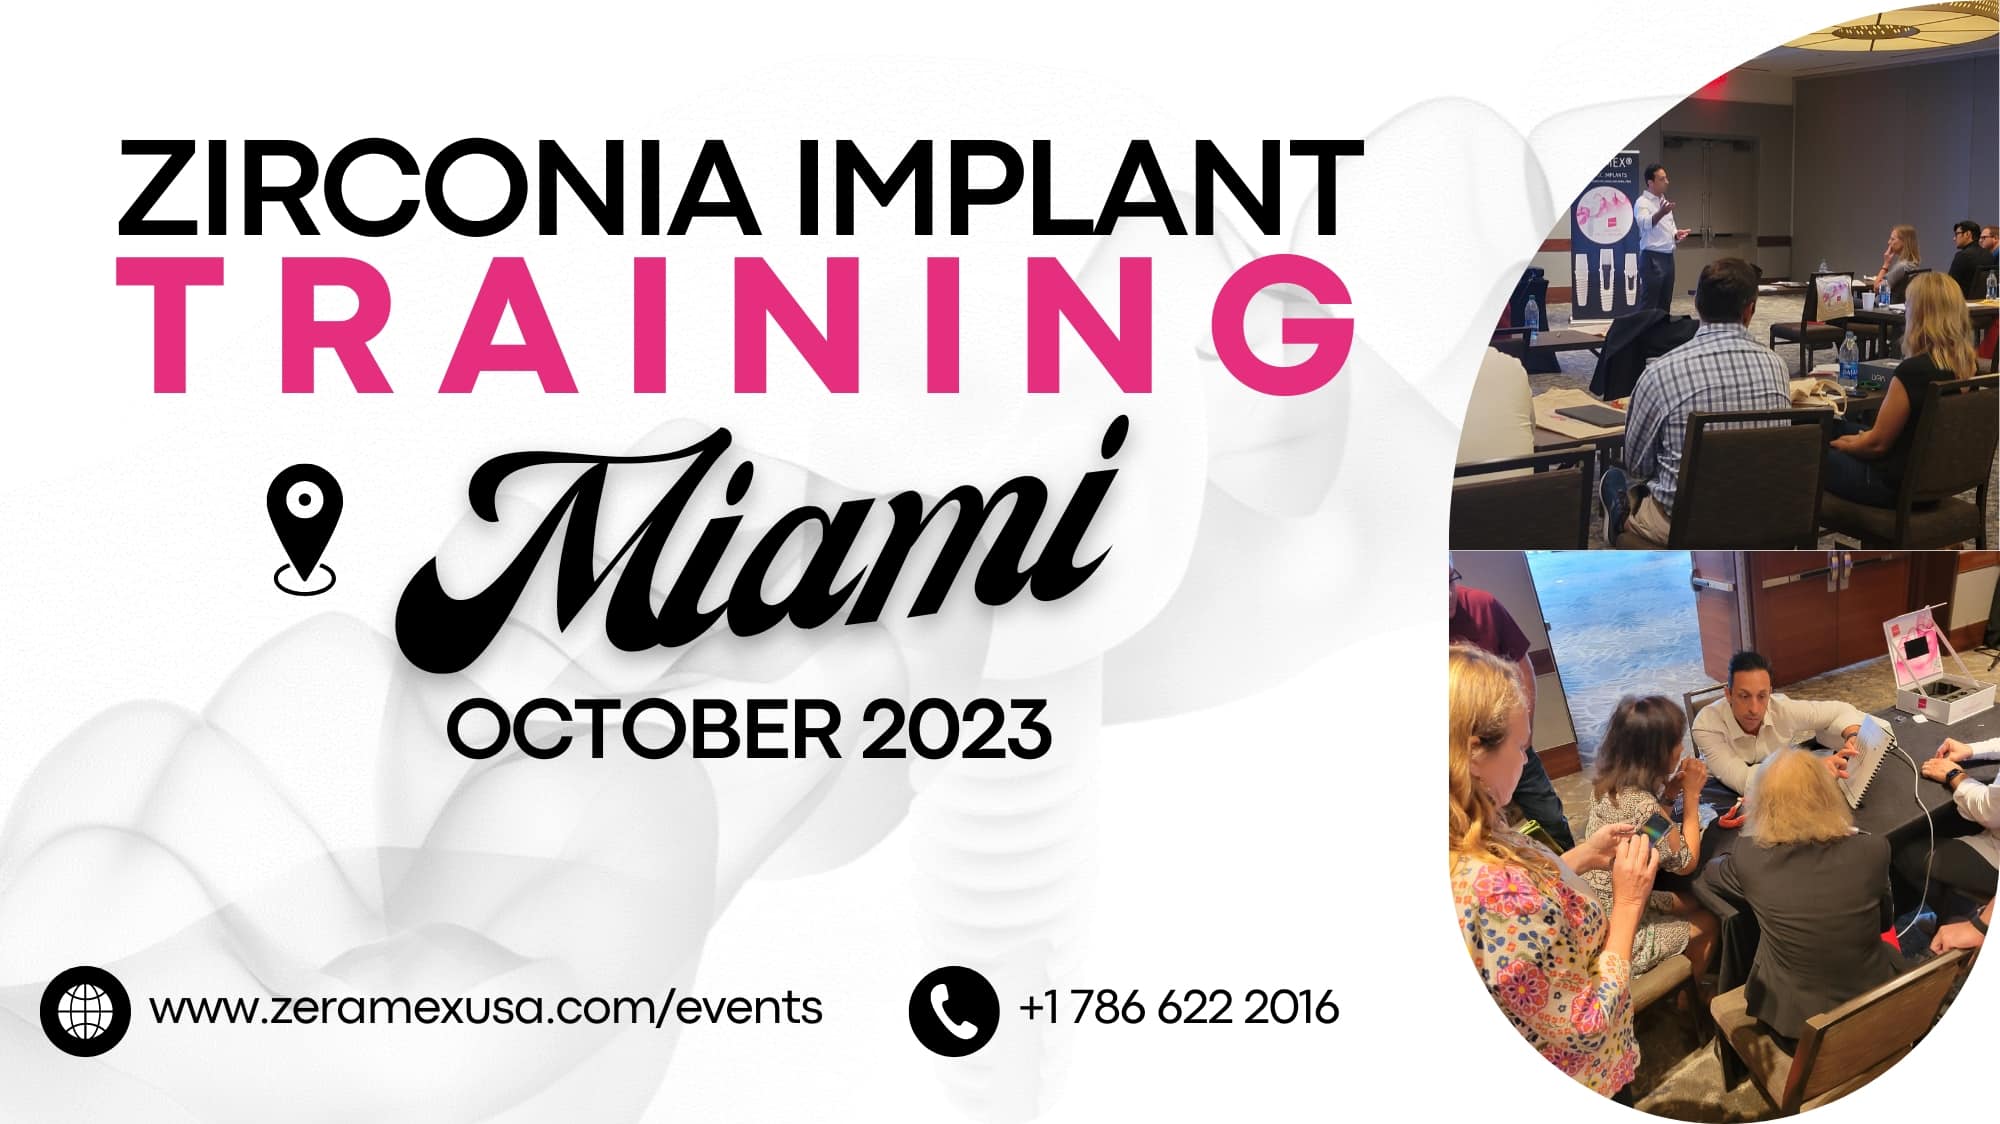 zeramexusa_zirconia implant training_miami_2023